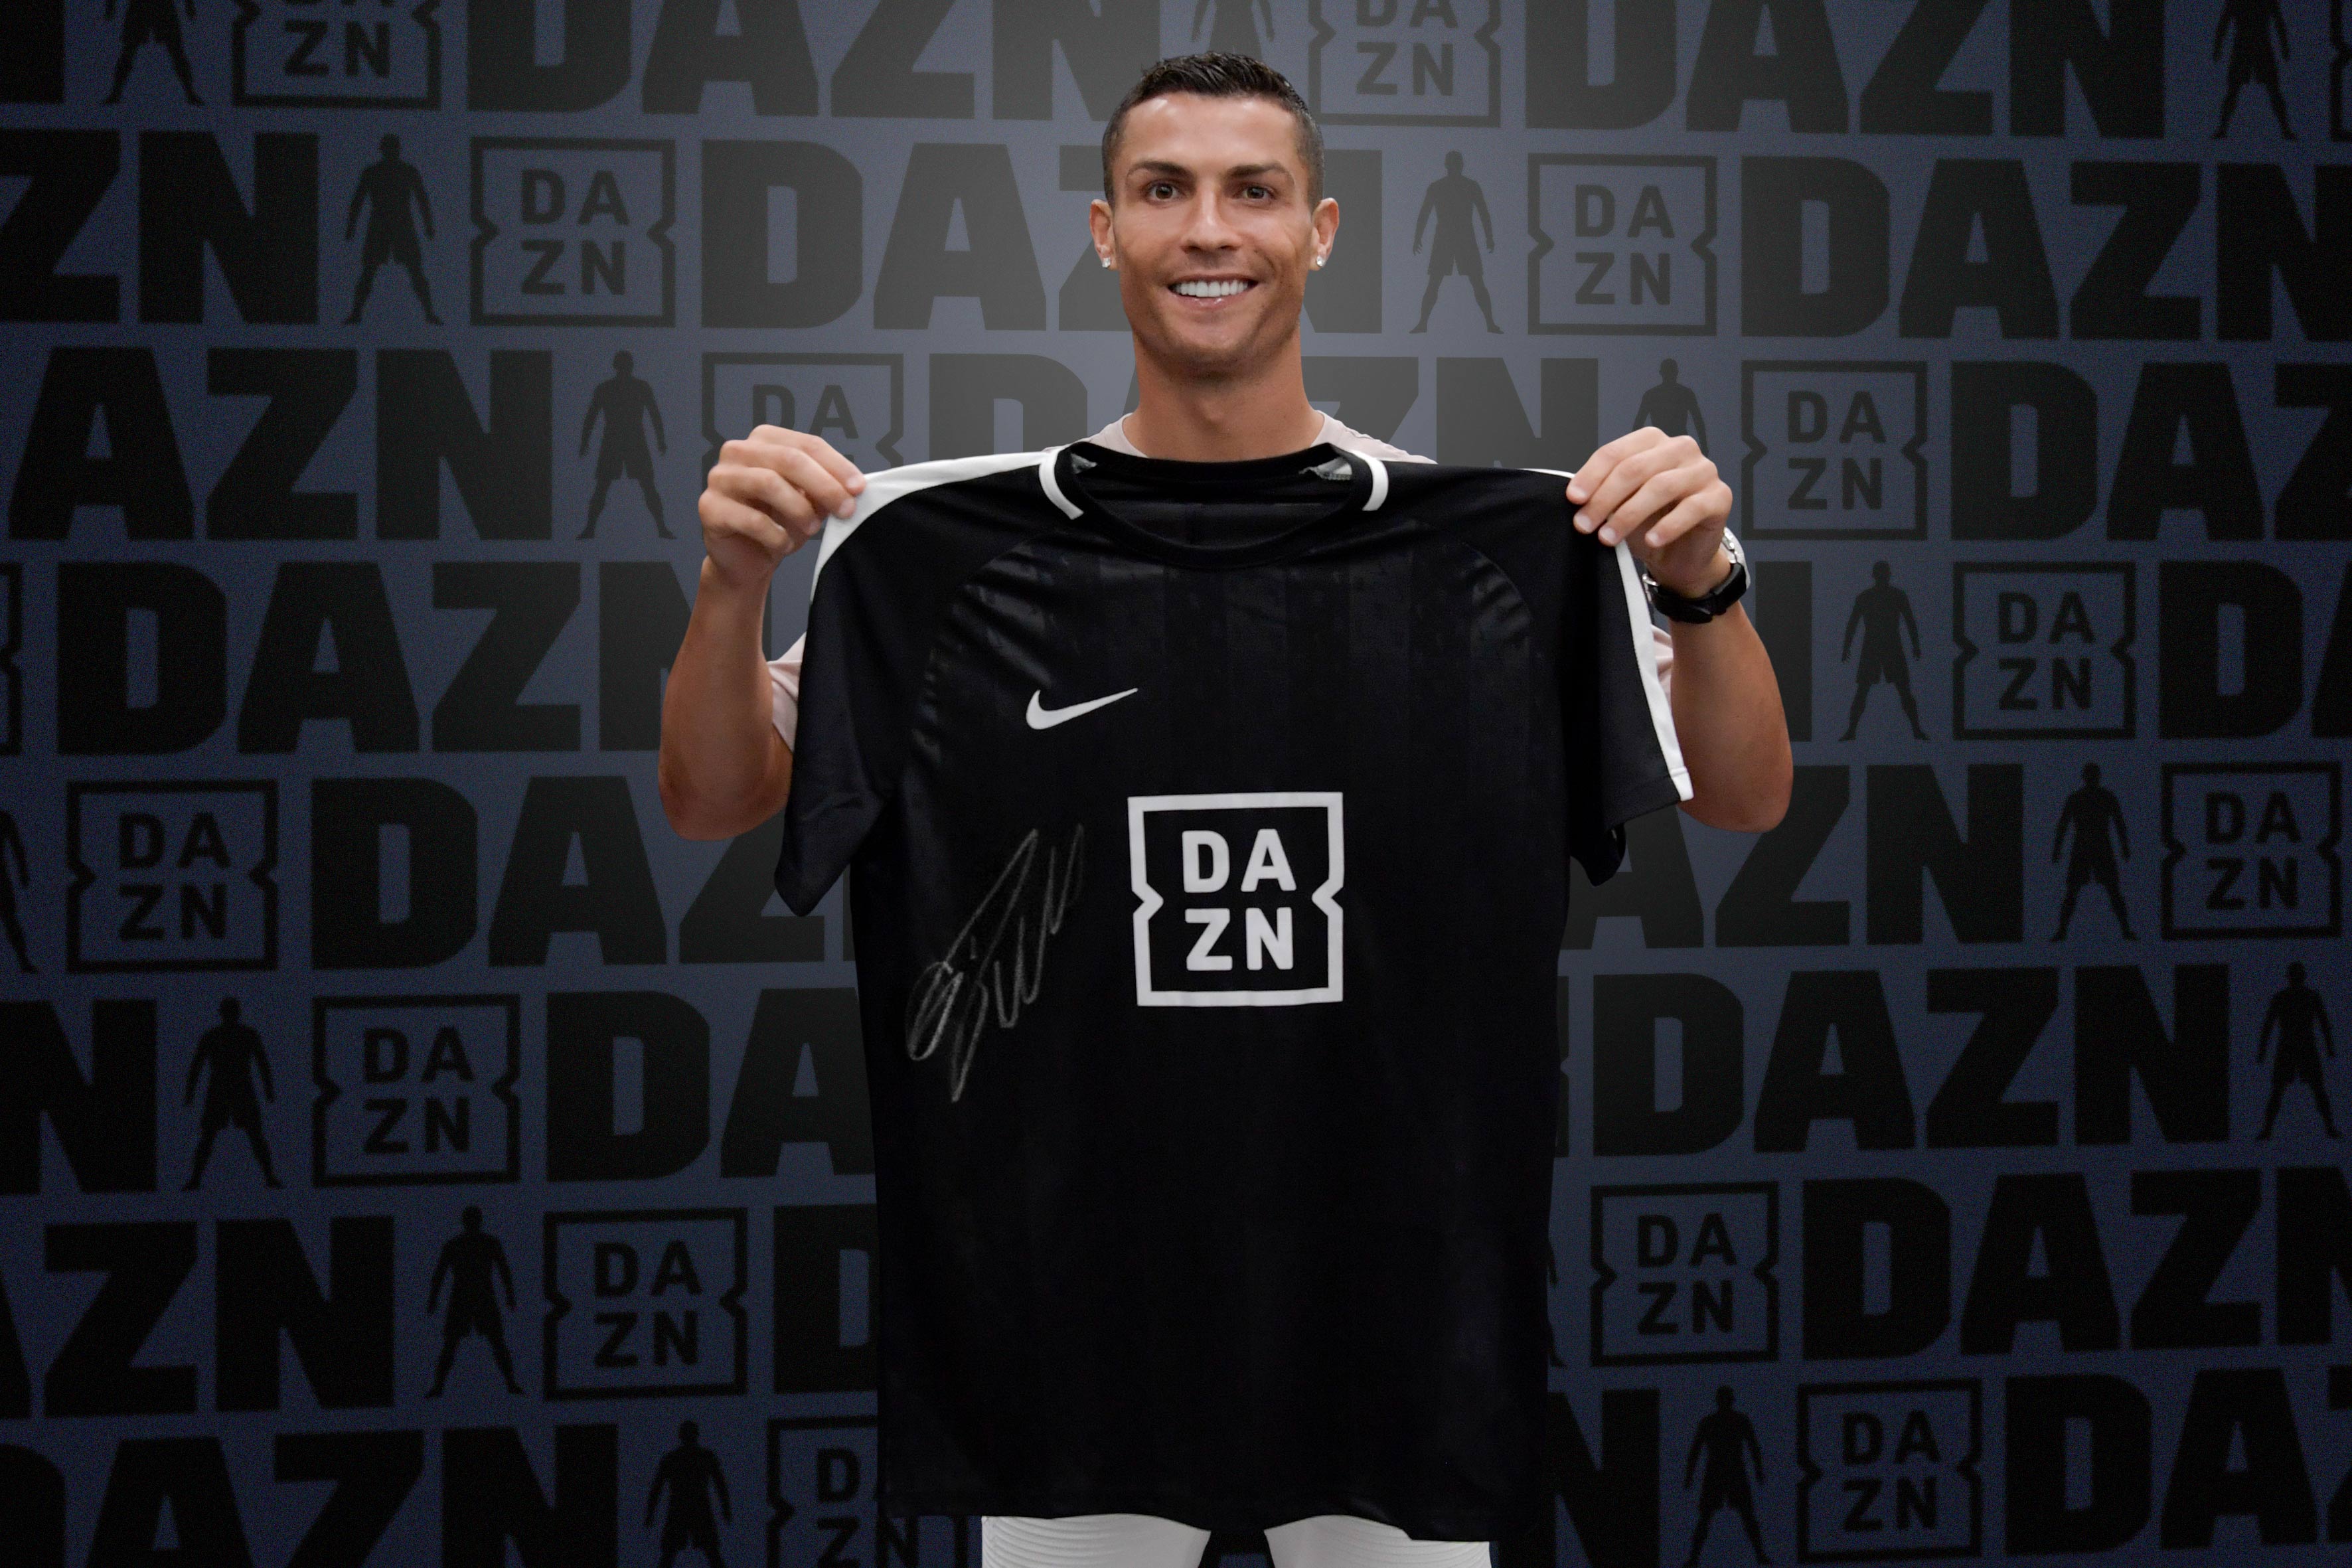 Cristiano Ronaldo The Sports Streaming Service Dazn Aim To Build On Back Of Juventus Forward S Endorsement Cityam Cityam